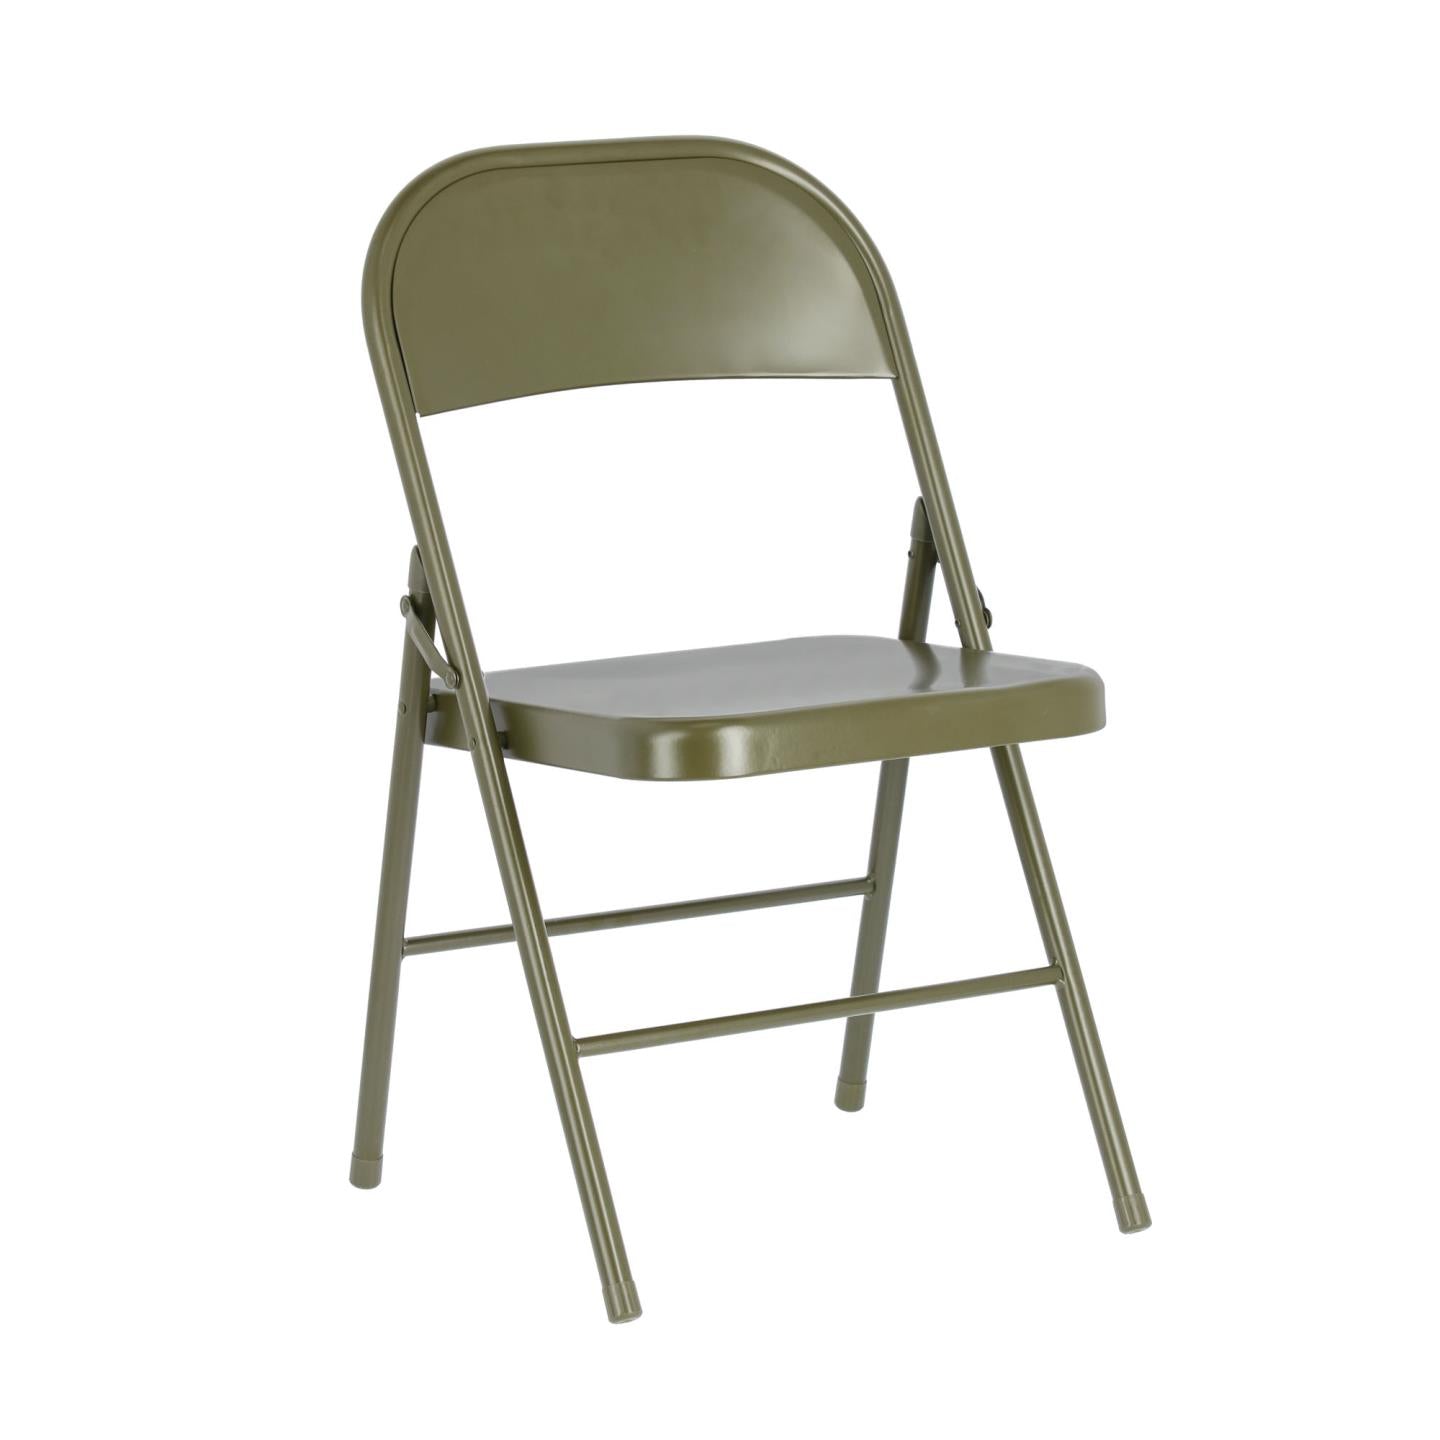 Aidana metal folding chair in dark green